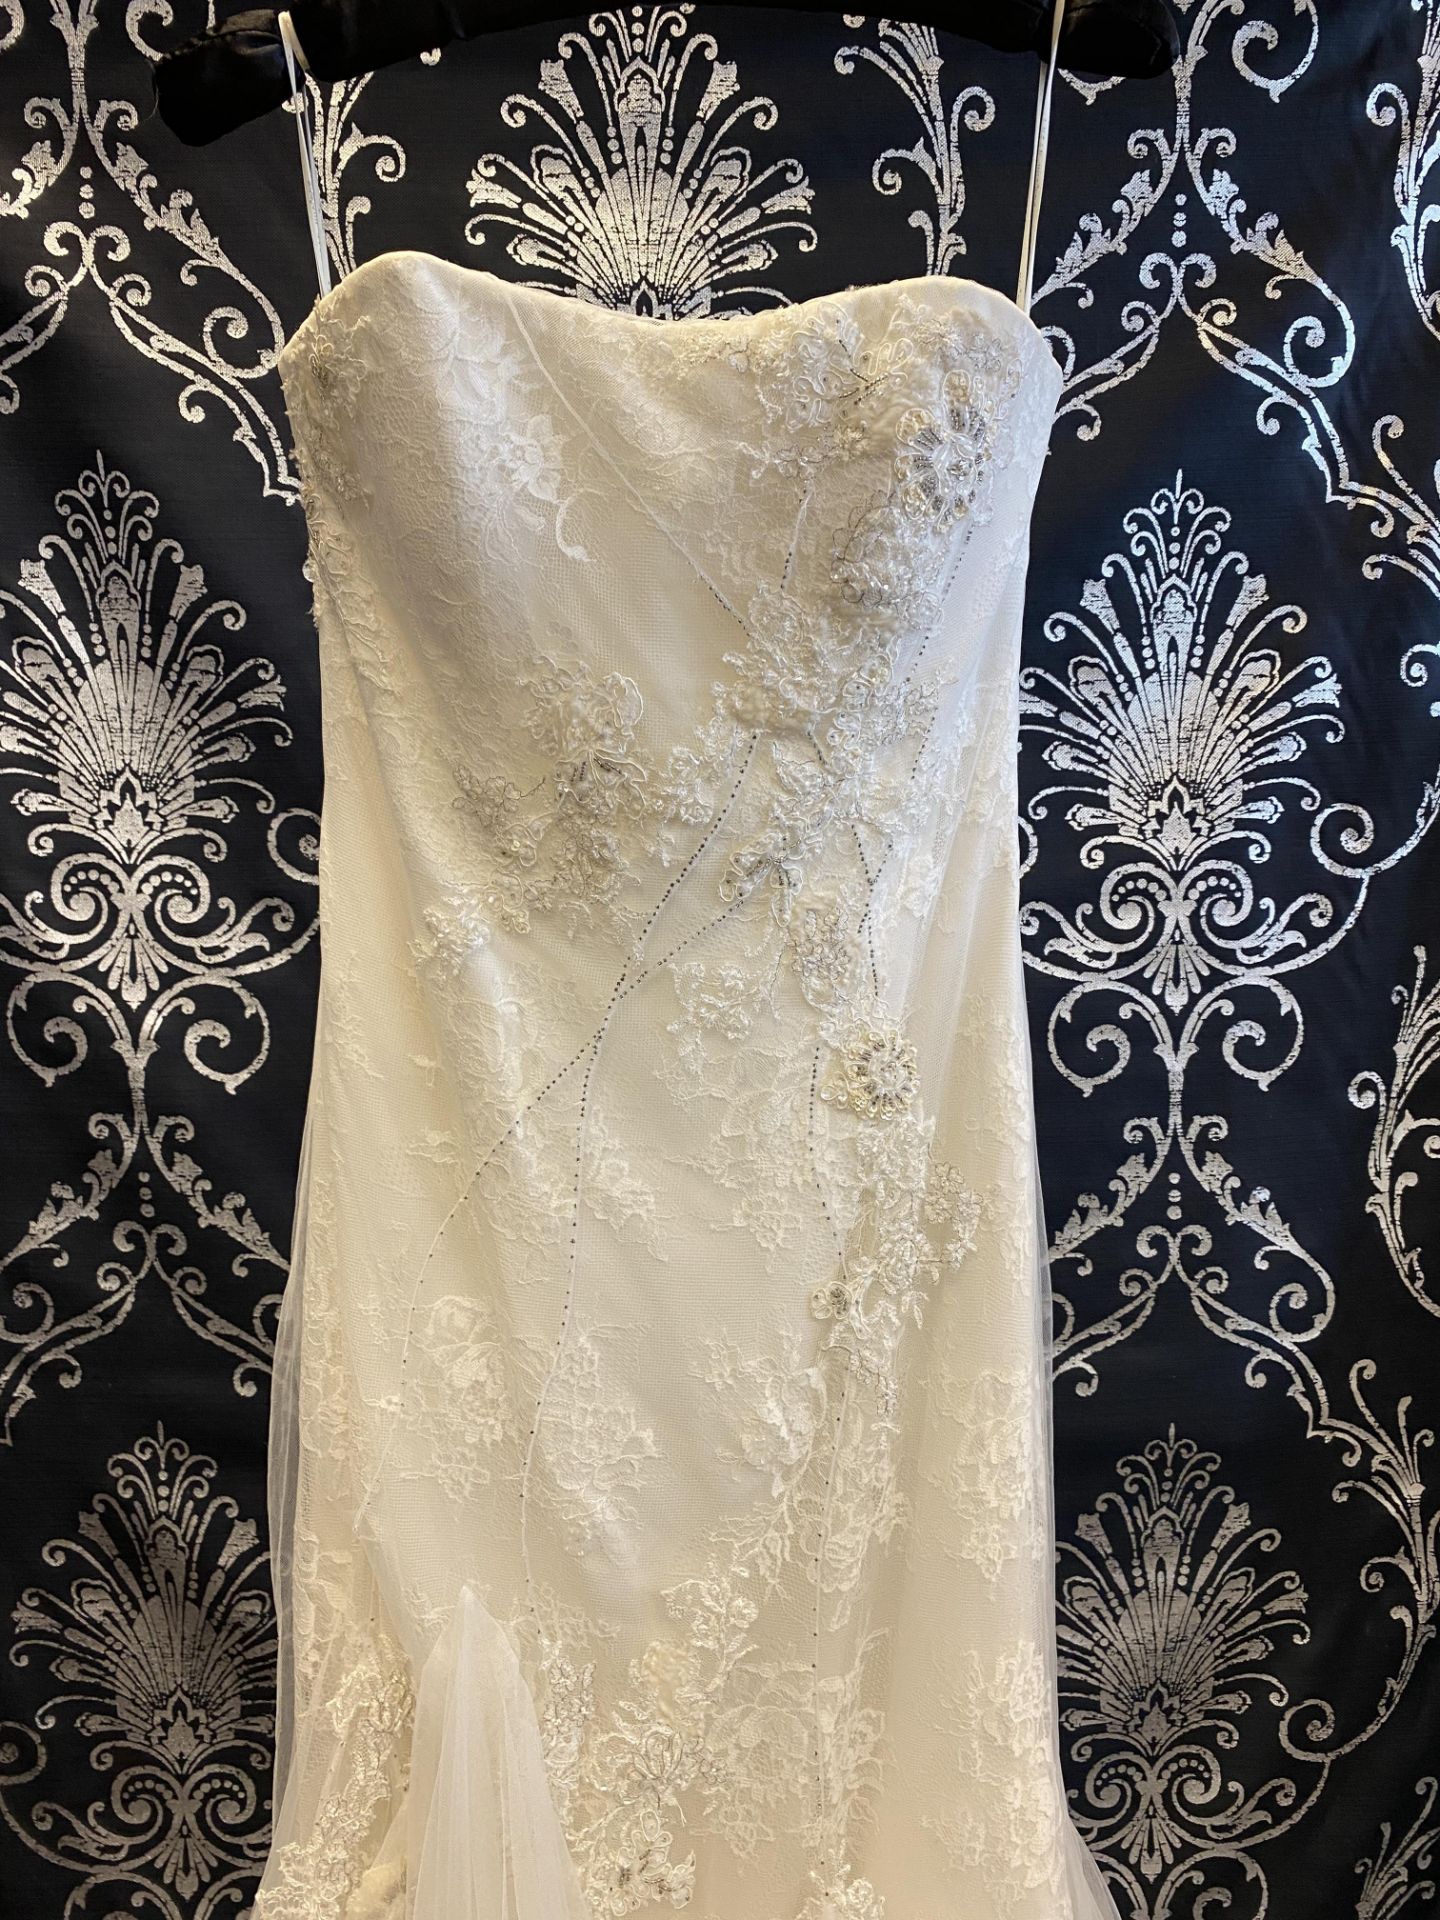 1 x LUSAN MANDONGUS Elegant Strapless Lace & Chiffon Fishtail Designer Wedding Dress RRP £1,950 UK12 - Image 4 of 9